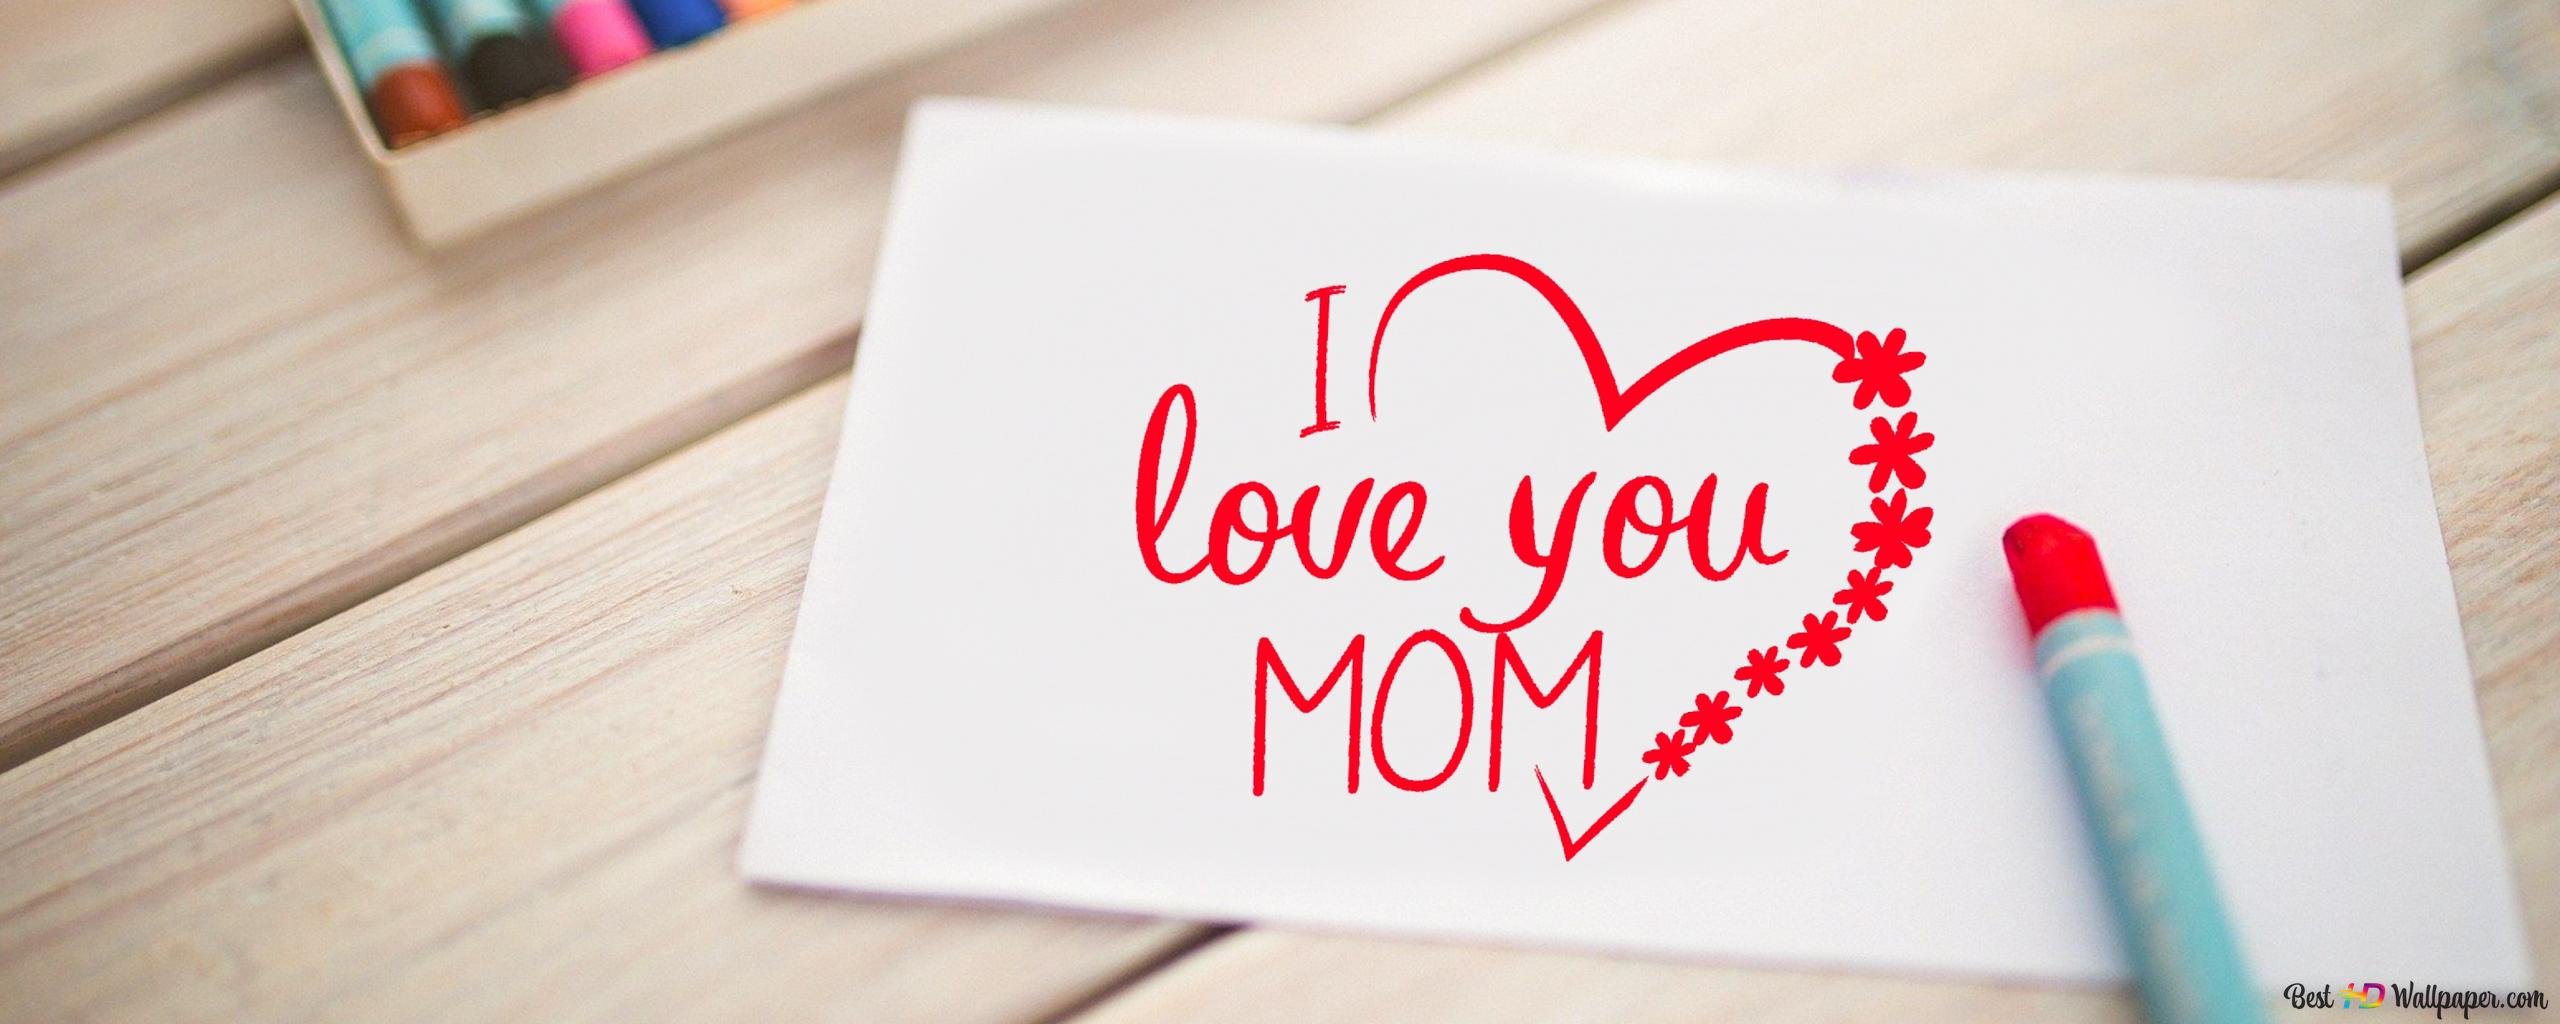 Обои любимой маме. Мама, я тебя люблю!. Обои мама я тебя люблю. Мамочка я тебя люблю. Мама я тебя люблю письмо.